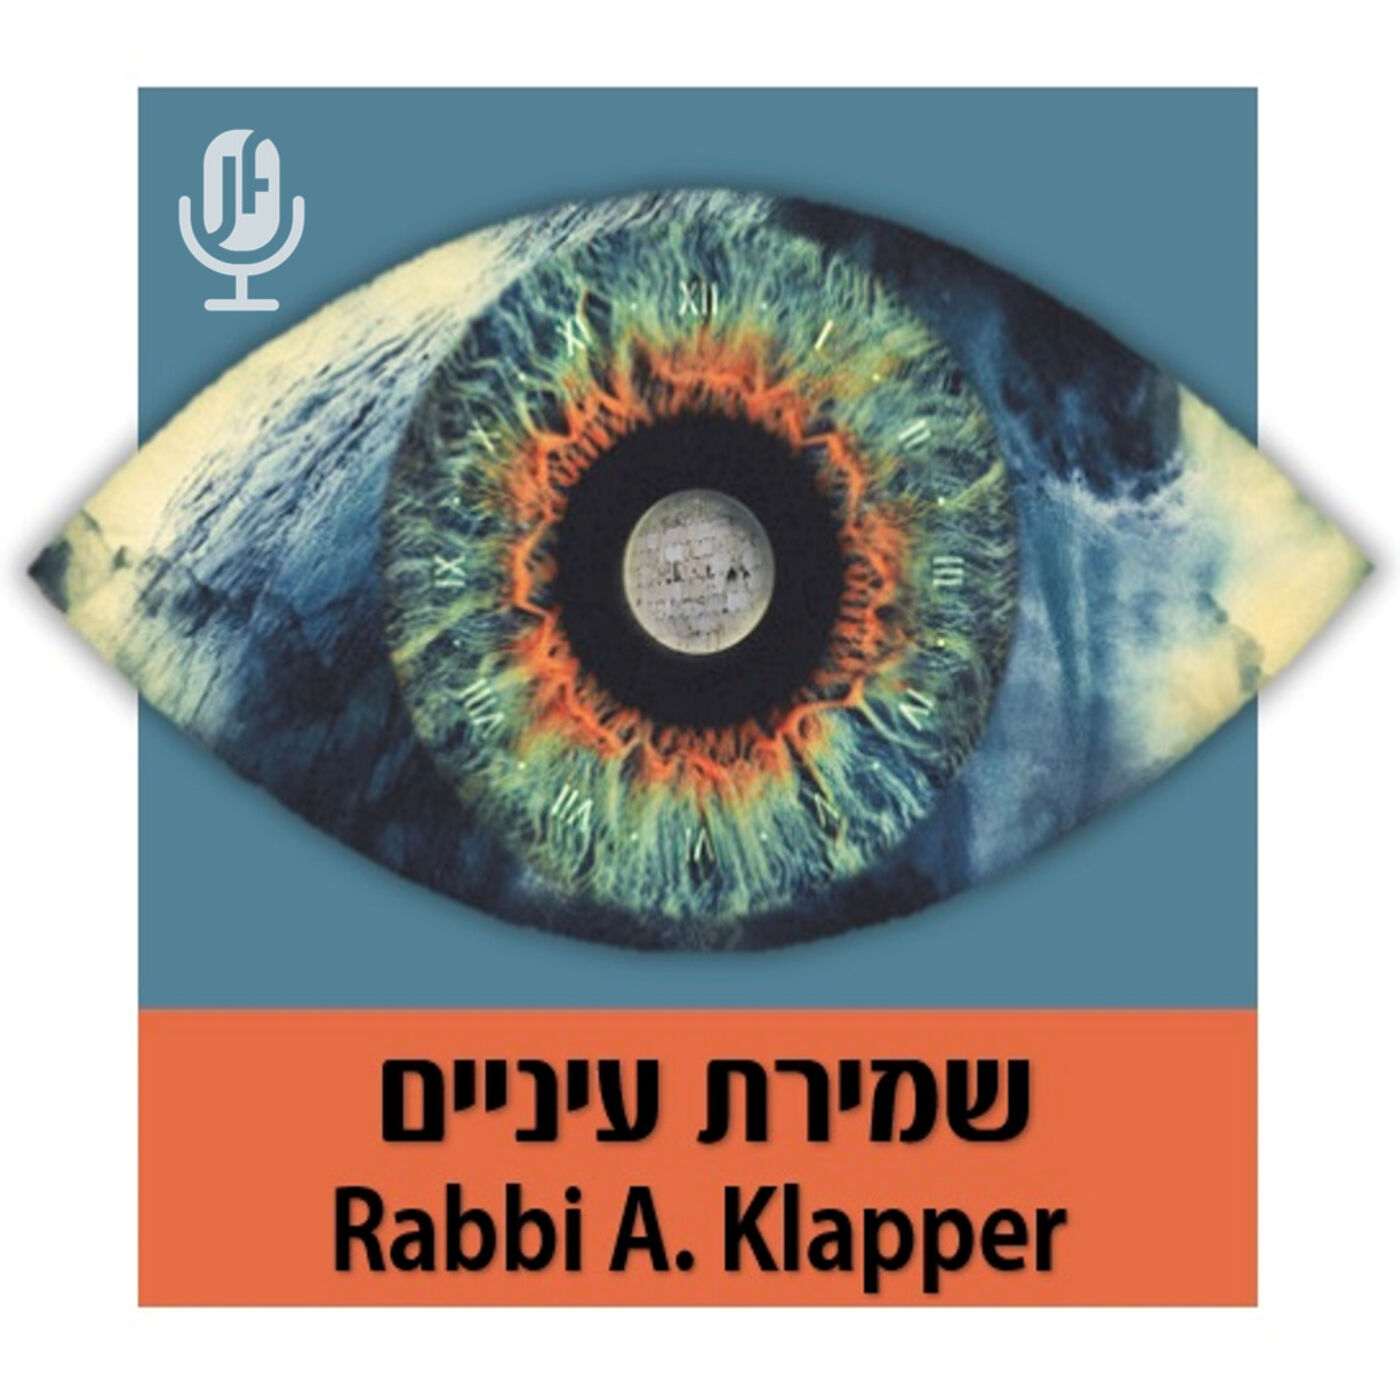 Shmiras Einayim with Rabbi Ari Klapper